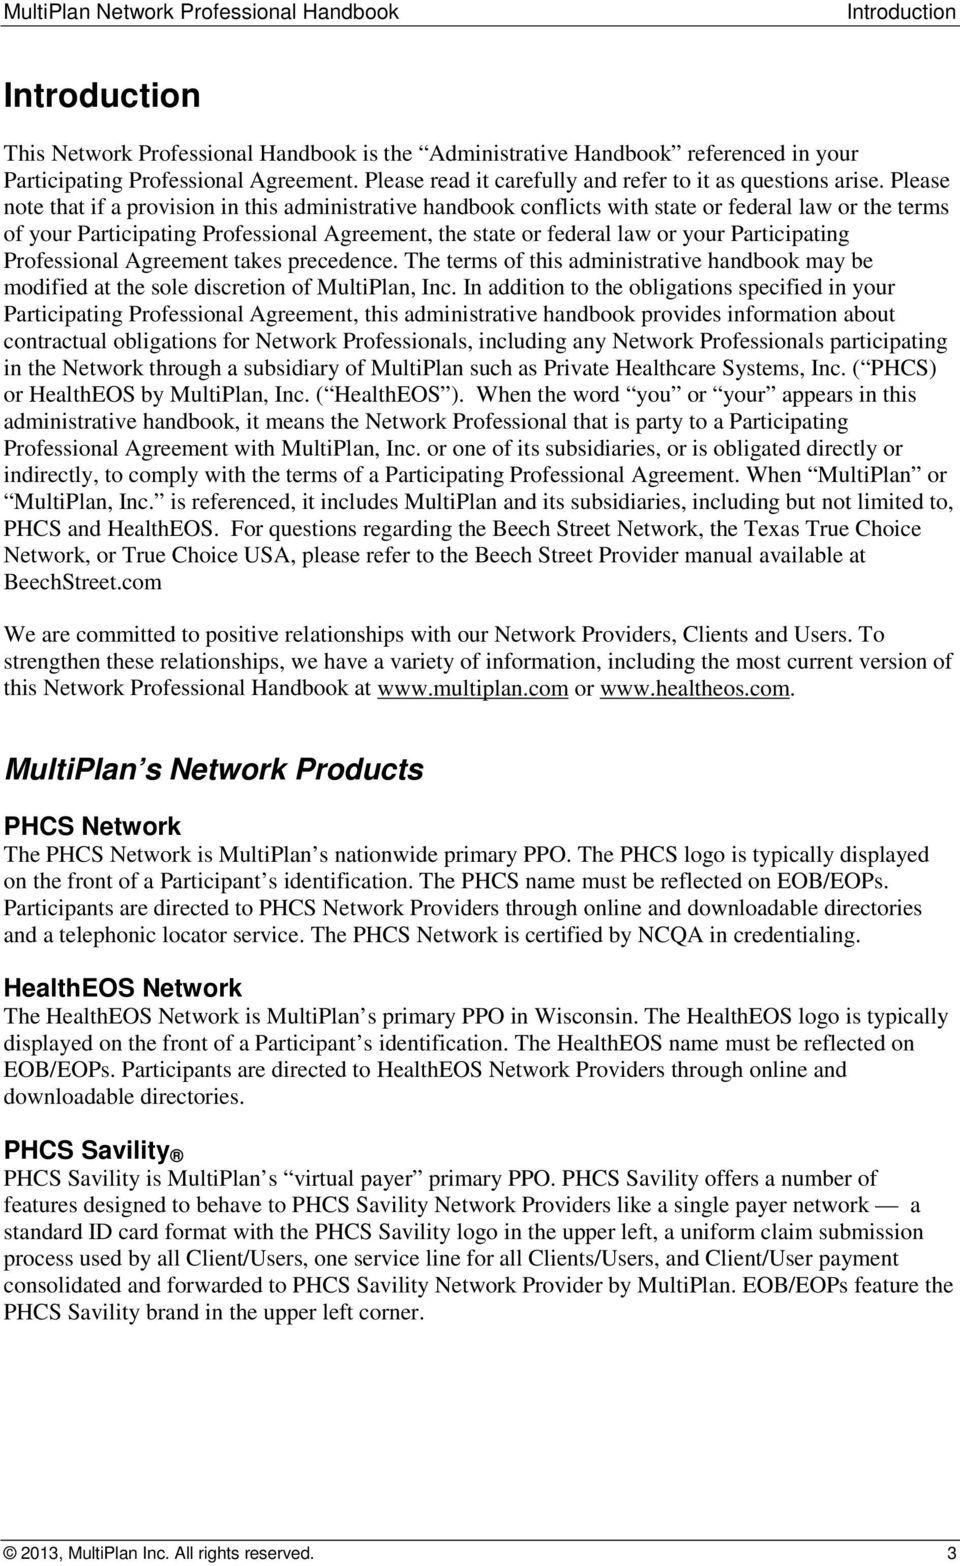 MultiPlan Logo - MultiPlan Network Professional Handbook